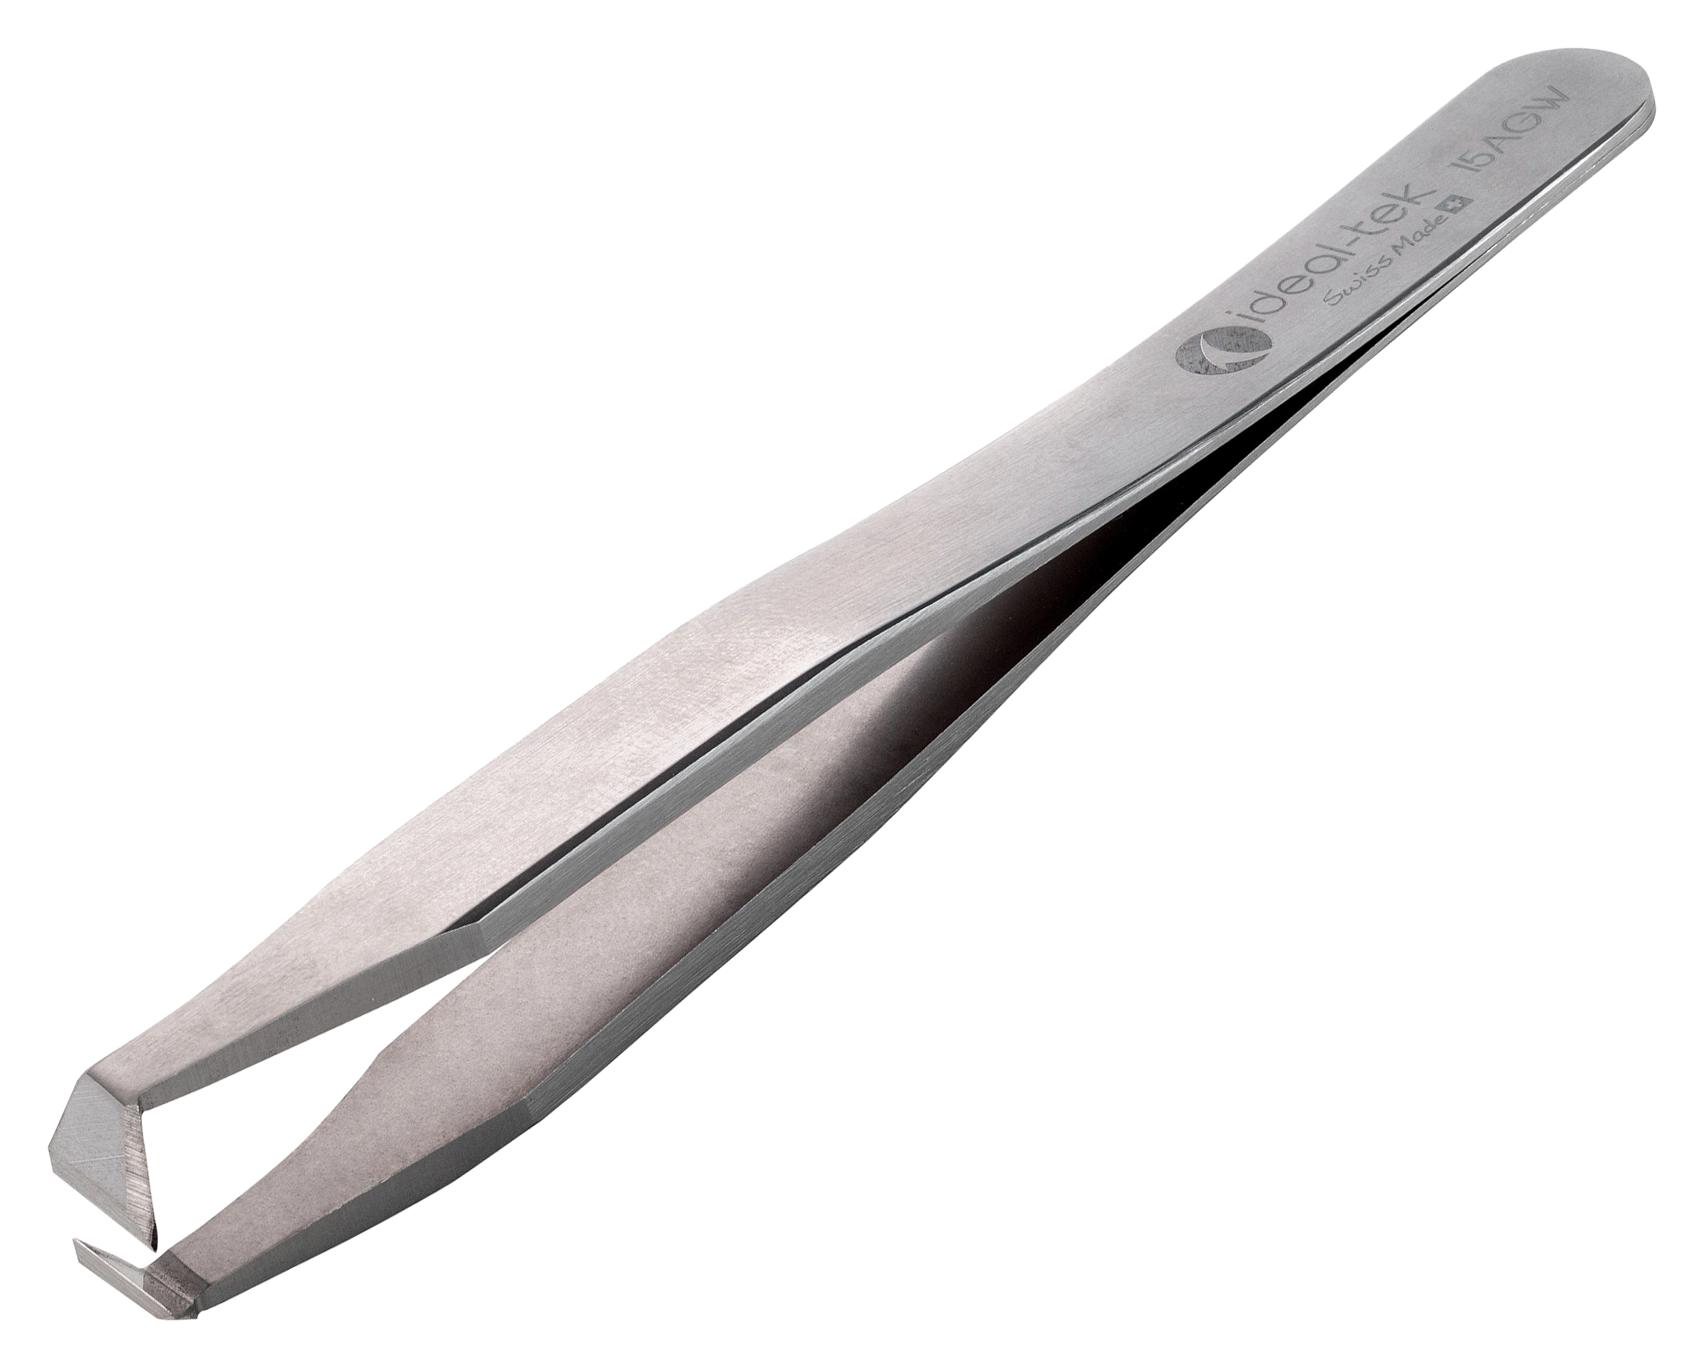 Ideal-tek 15Agw Cutting Tweezers, High Precision